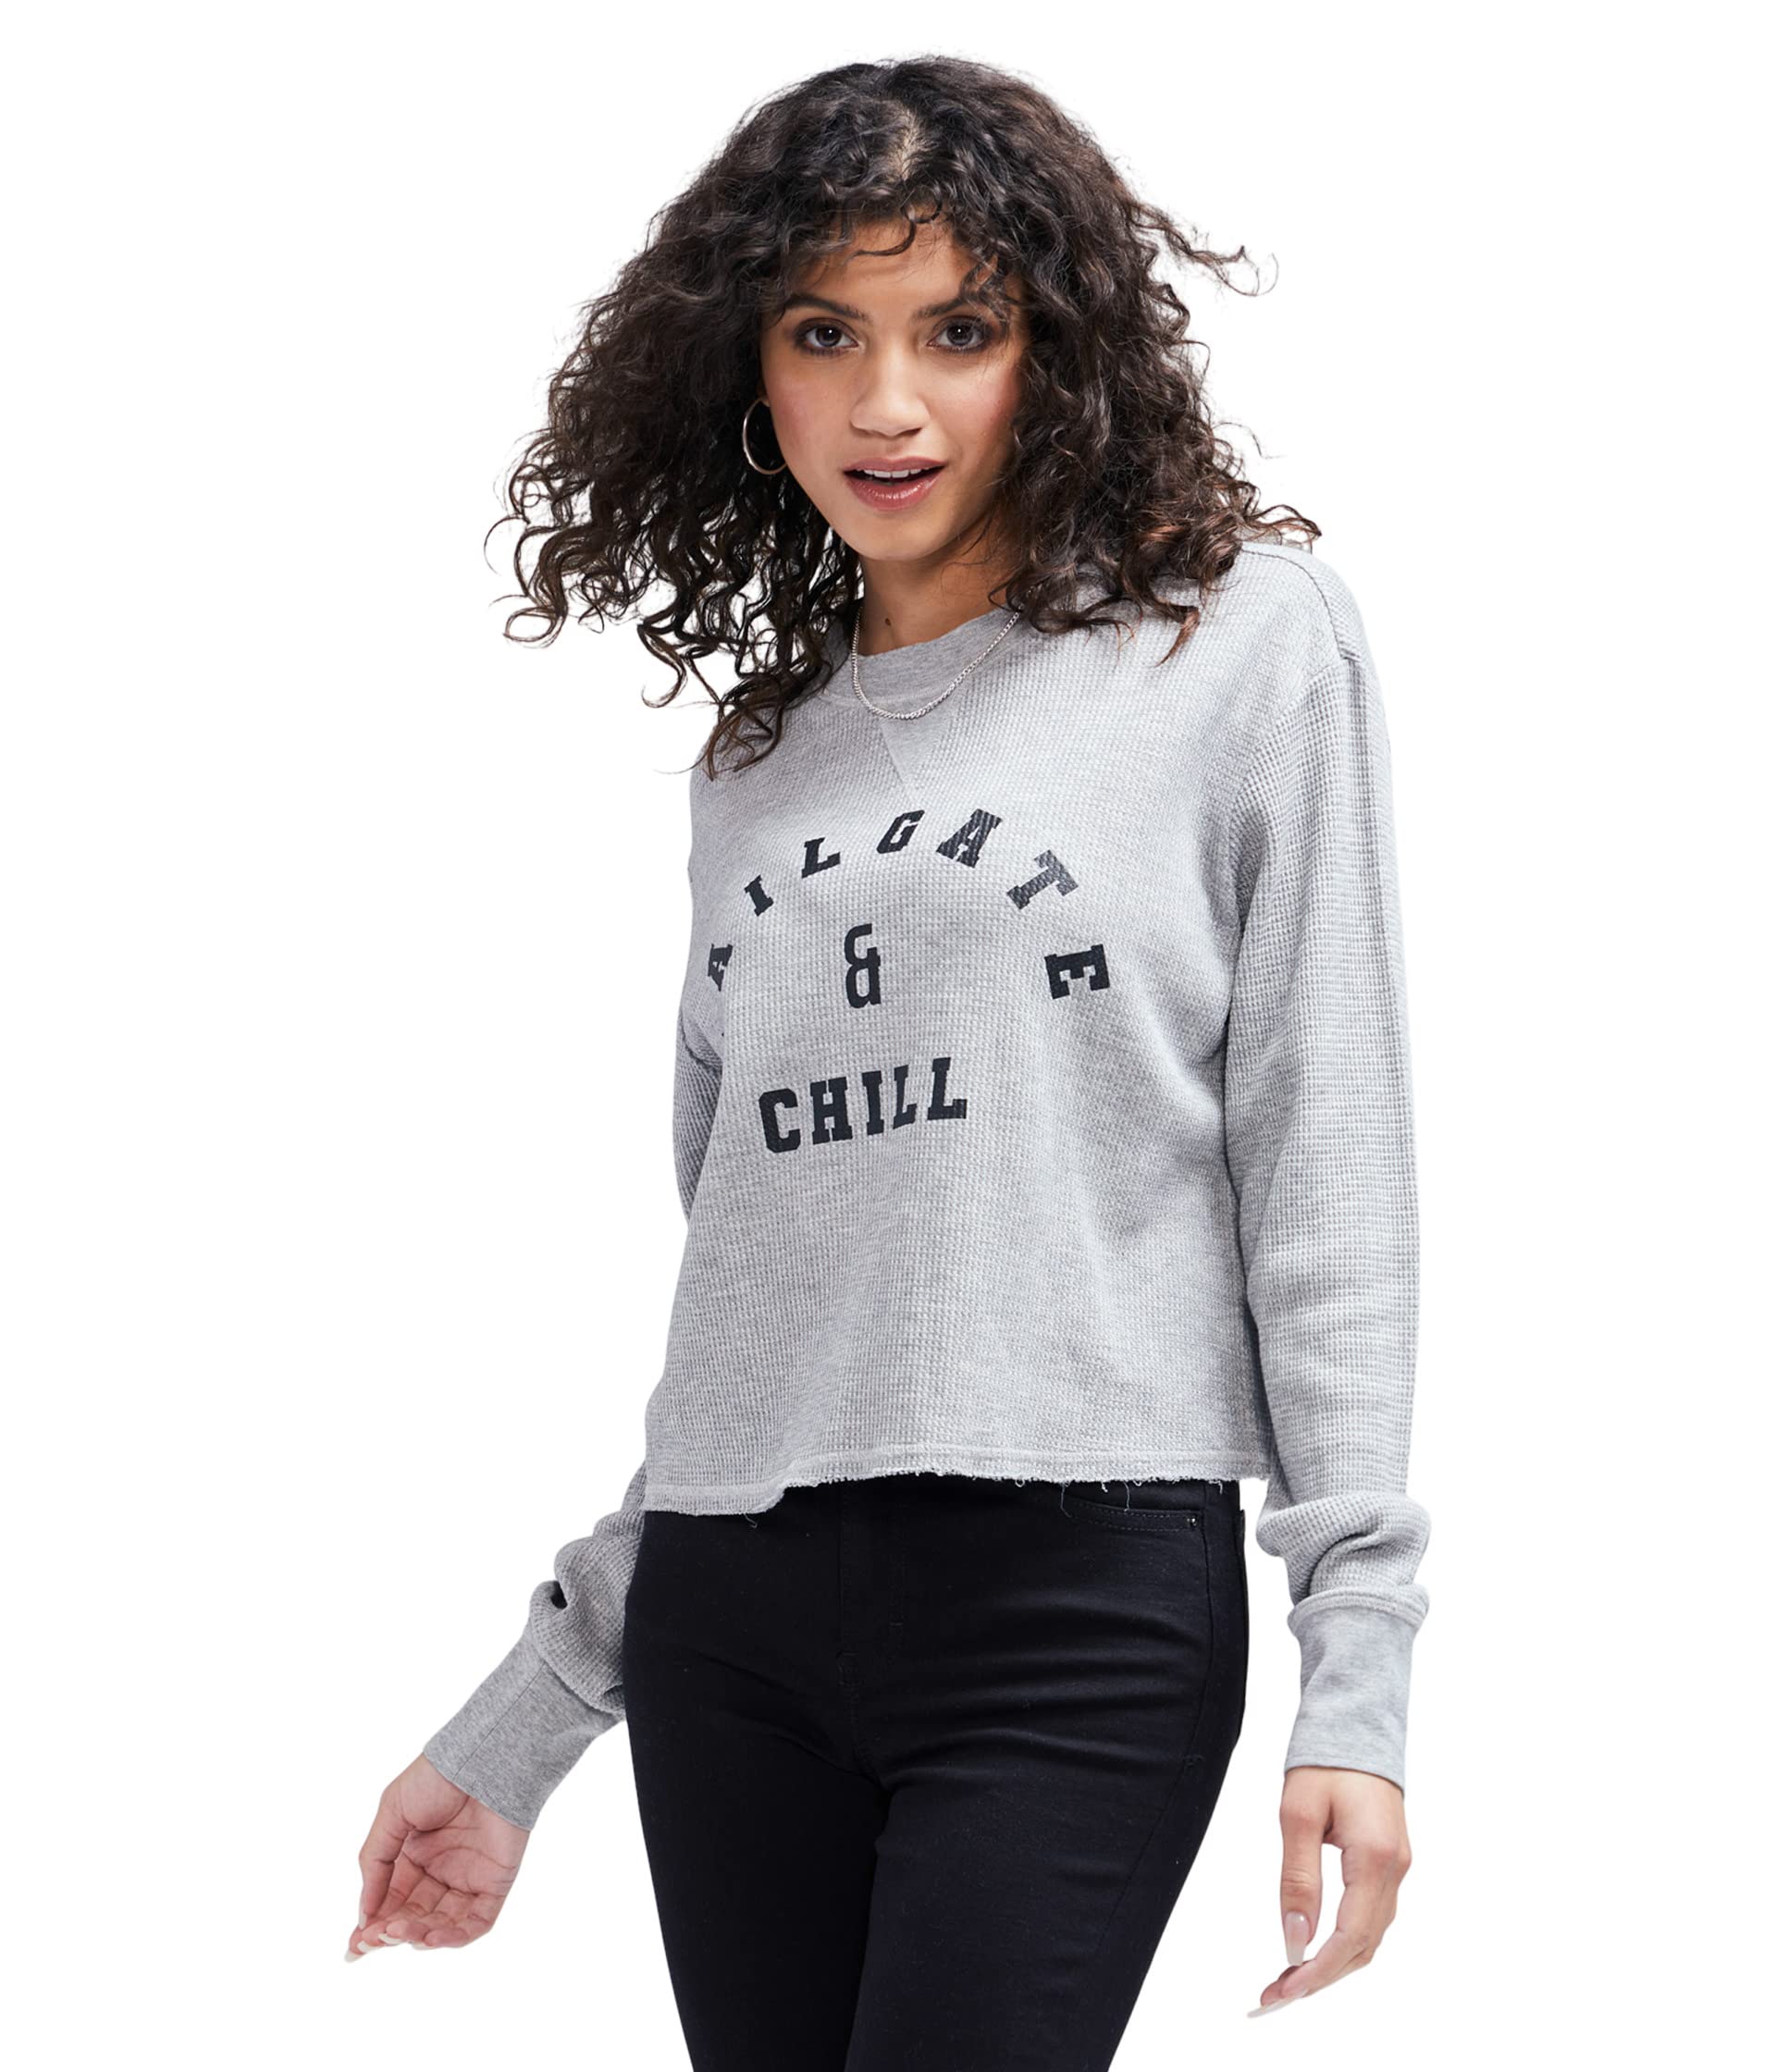 Пуловер Wildfox, Tailgate & Chill Sweatshirt